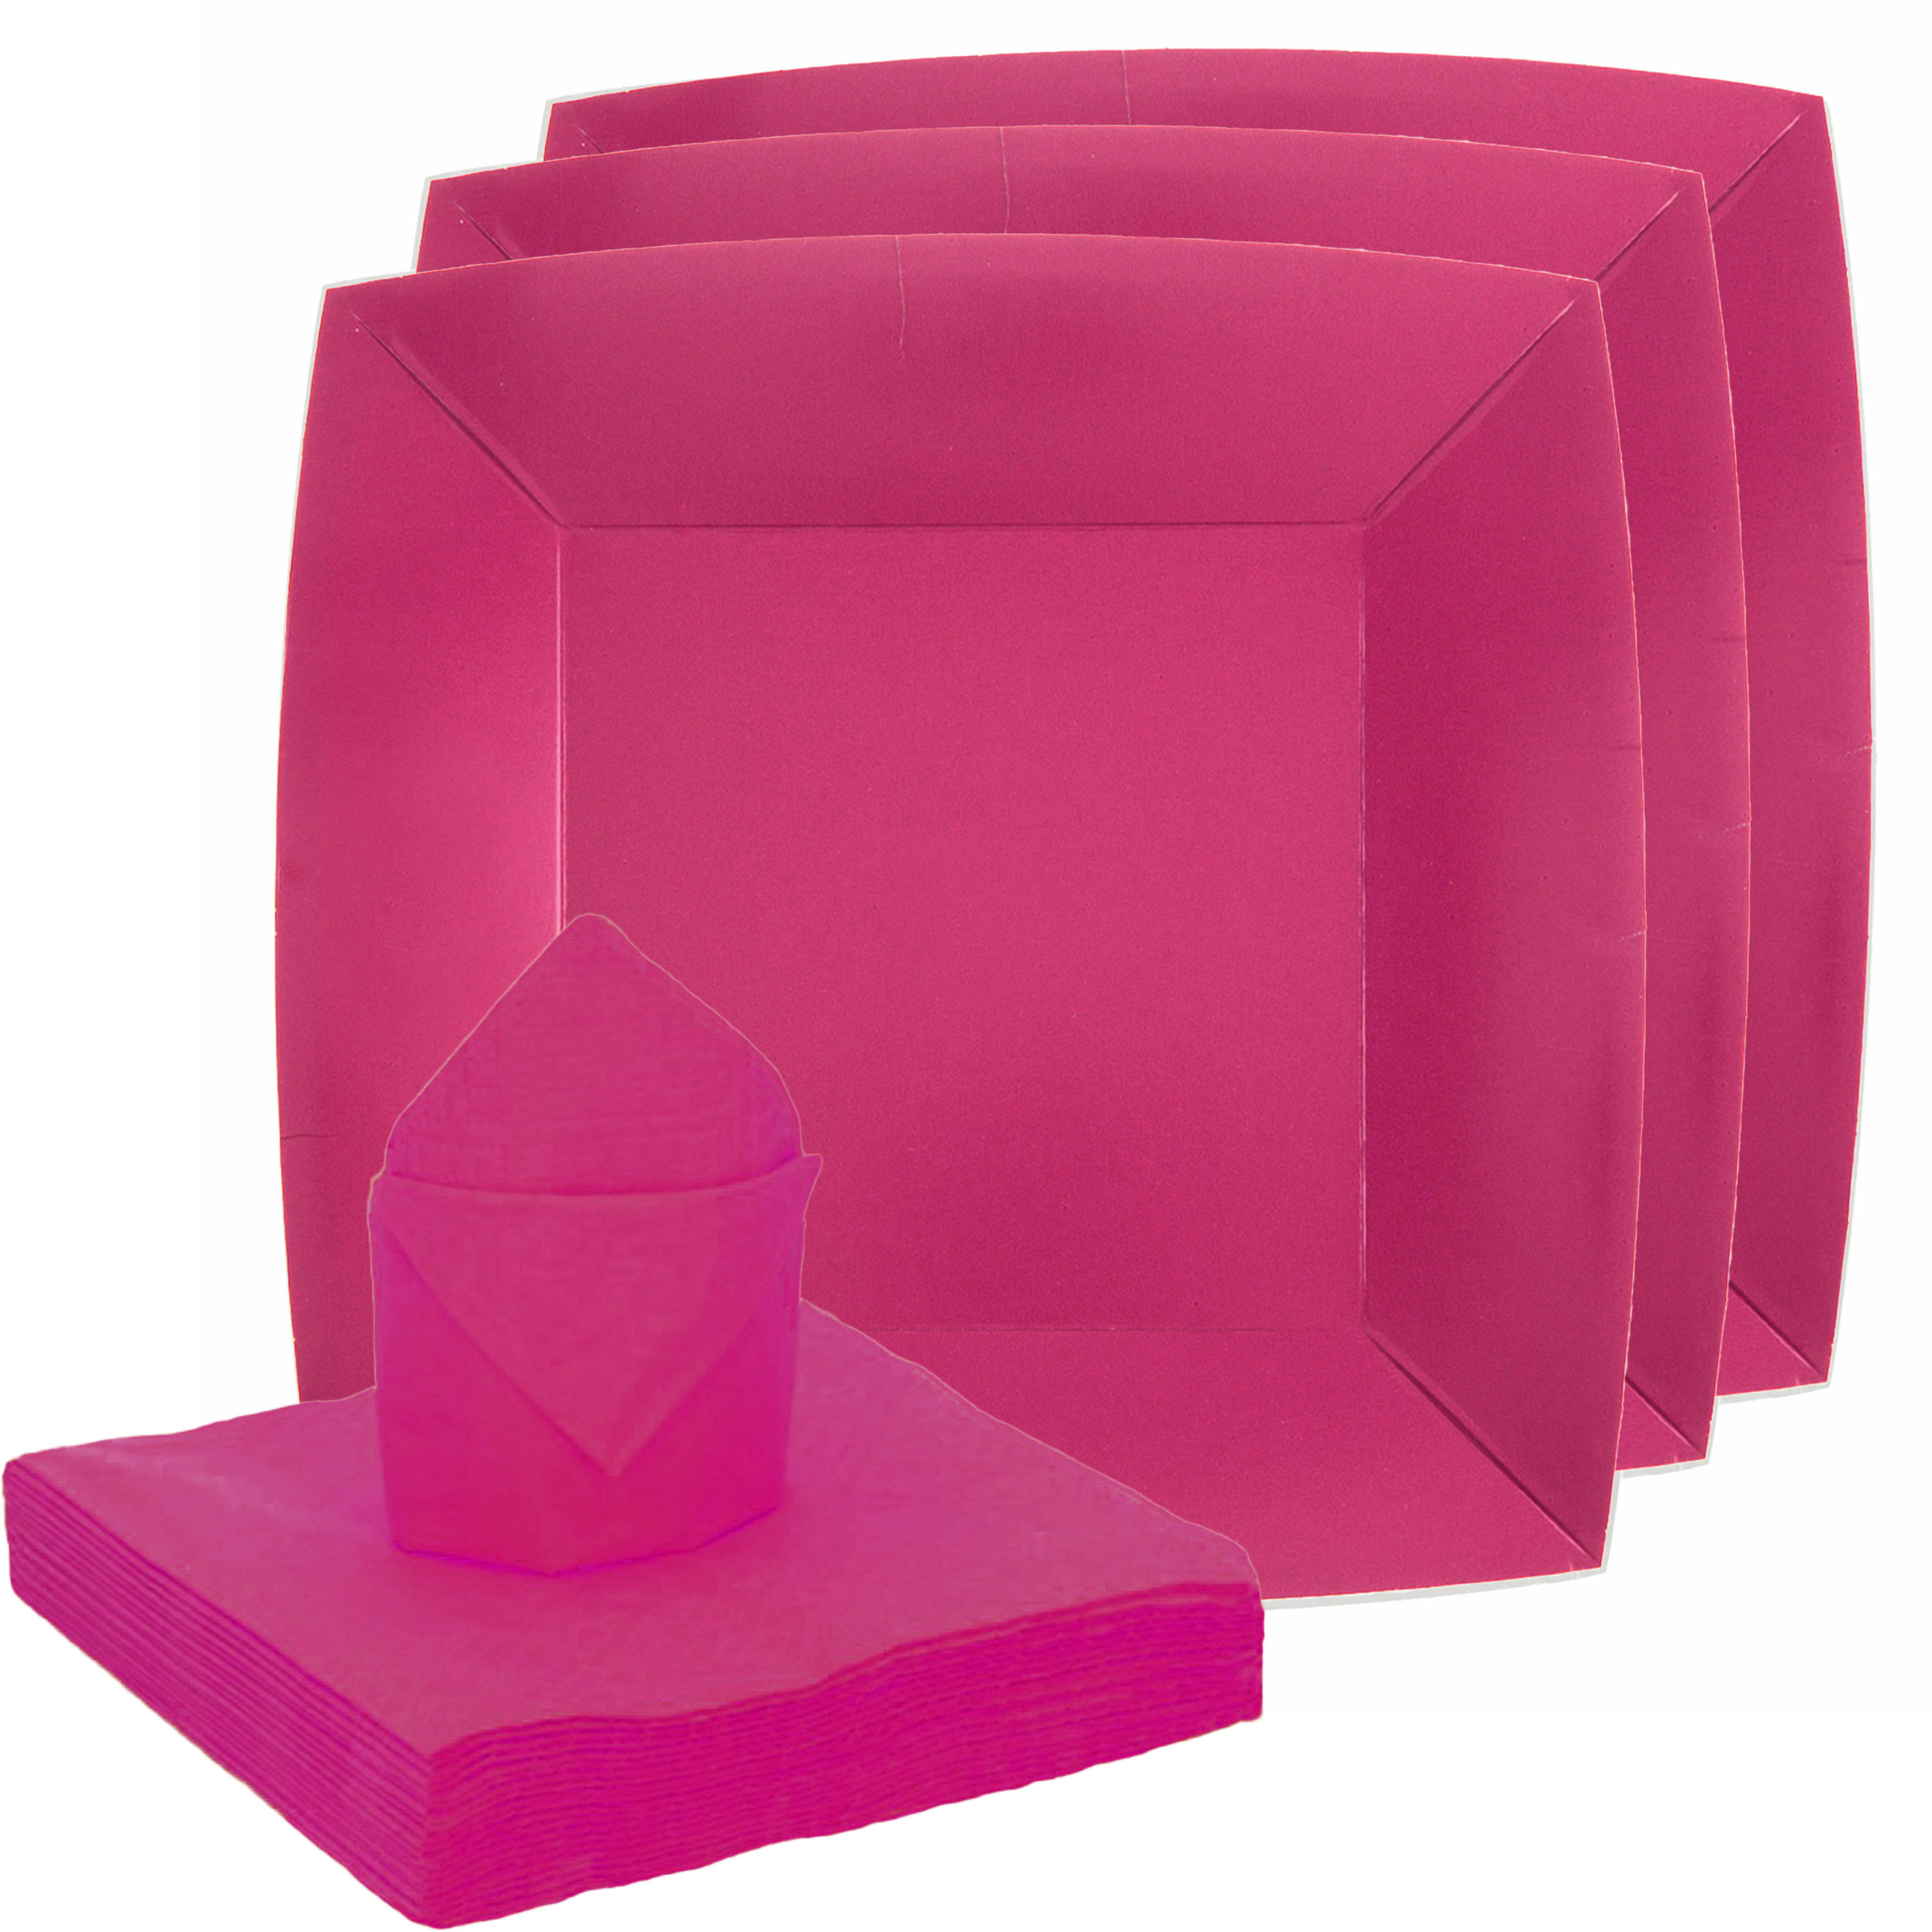 Feest-verjaardag servies set 10x bordjes-25x servetten fuchsia roze karton